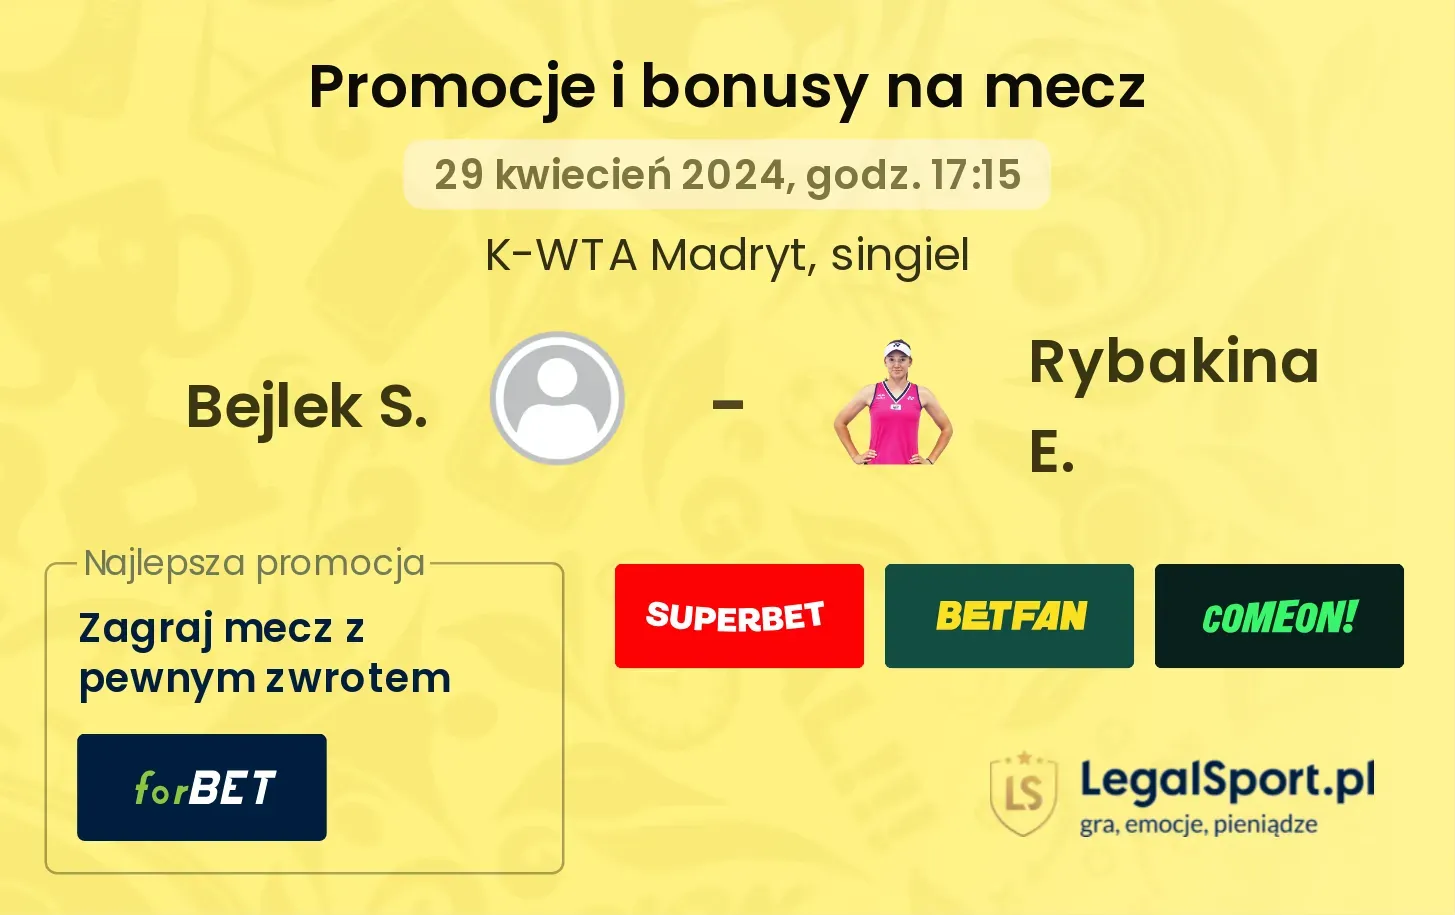 Bejlek S. - Rybakina E. promocje bonusy na mecz